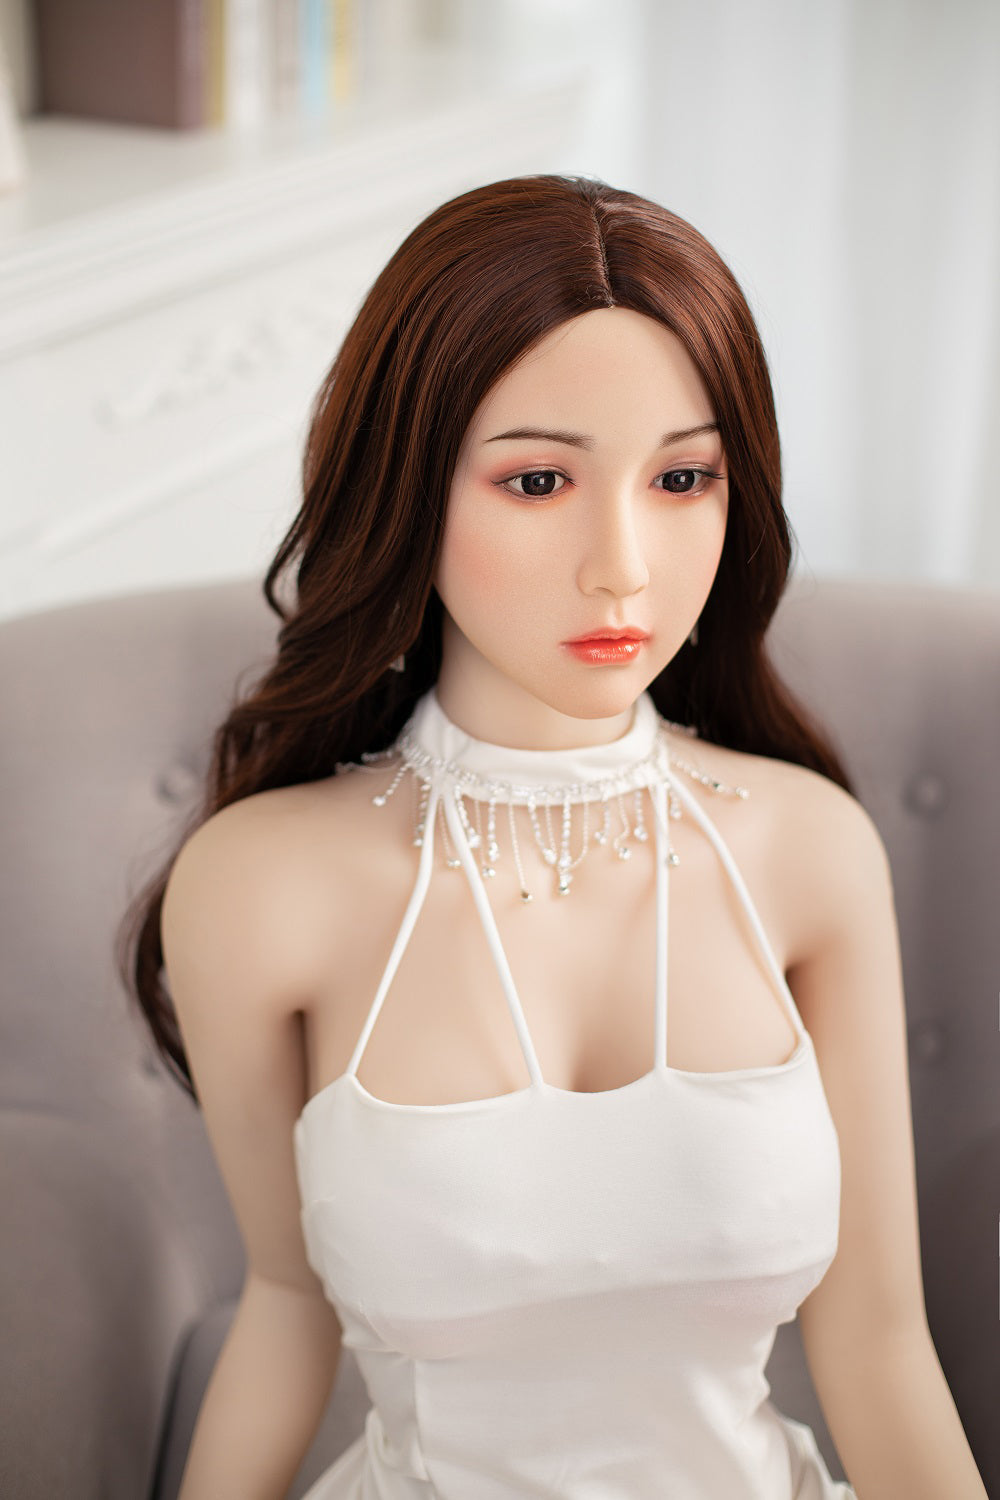 US Stock - Qian 165cm Good Girl Asian Realistic Adult Love Doll Big Boobs TPE Sex Doll